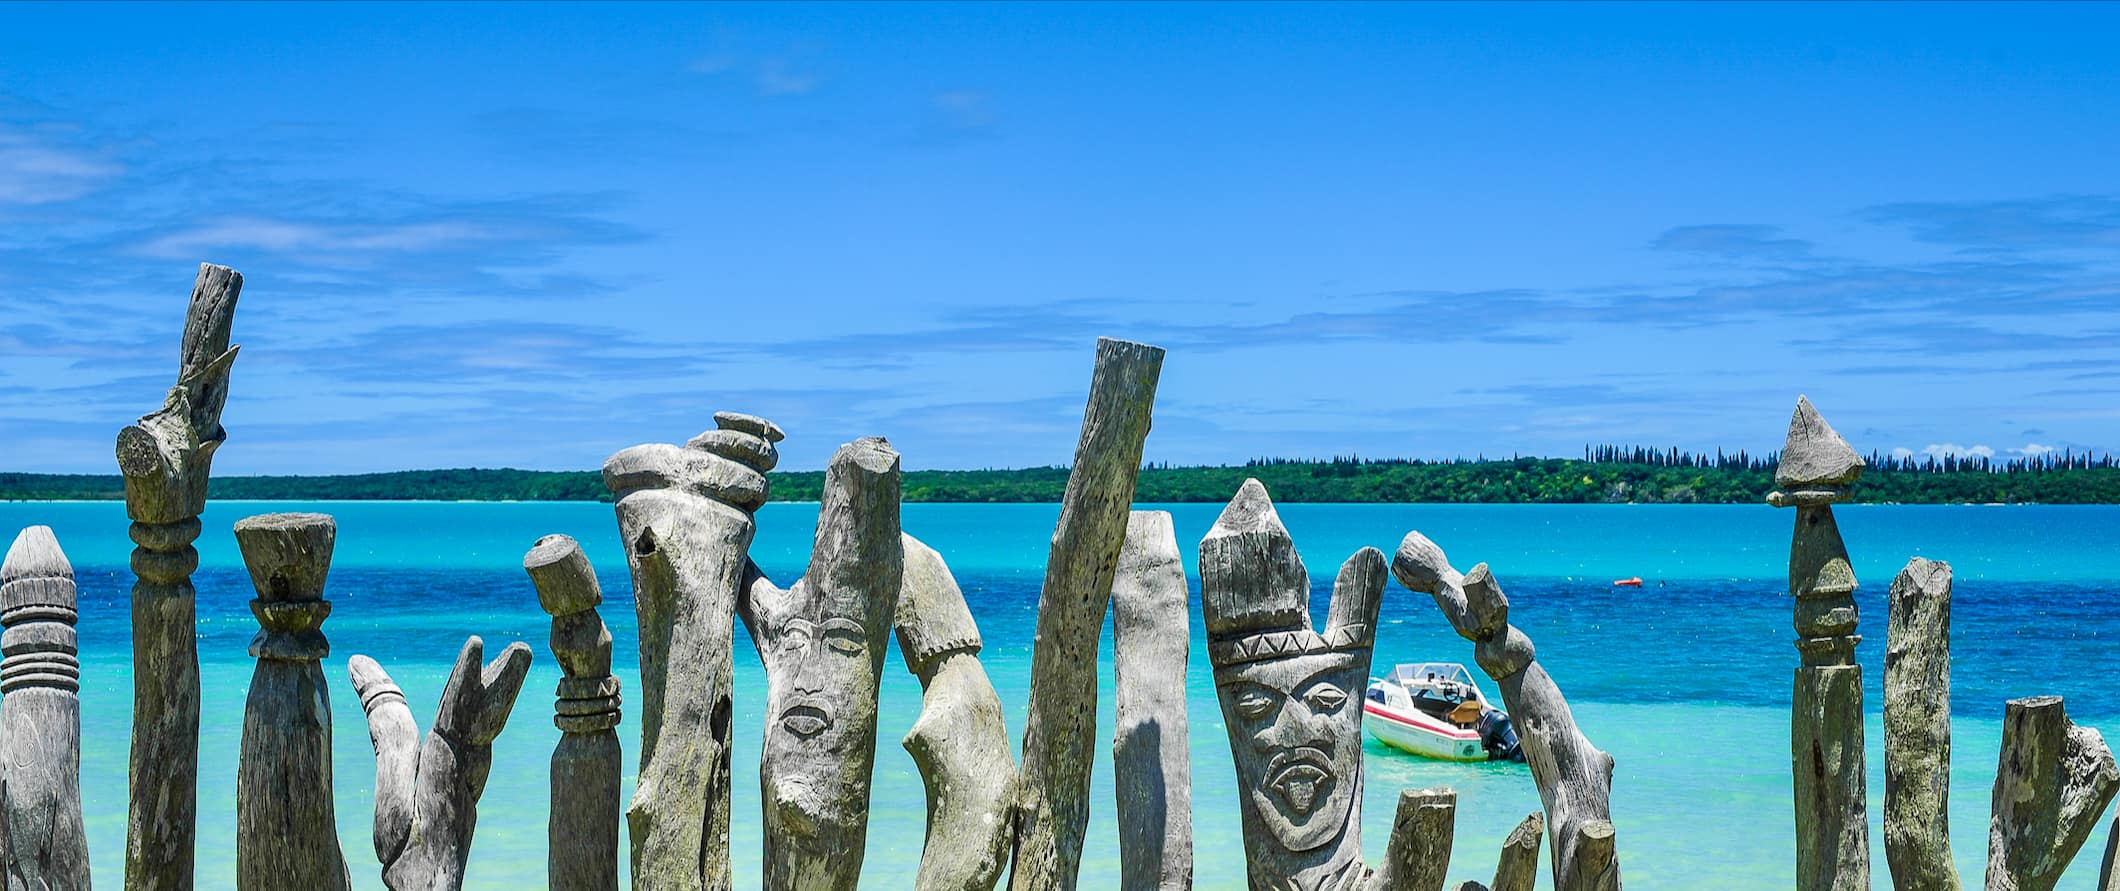 Carved wooden posts near the beach in sunny, bright Vanuatu